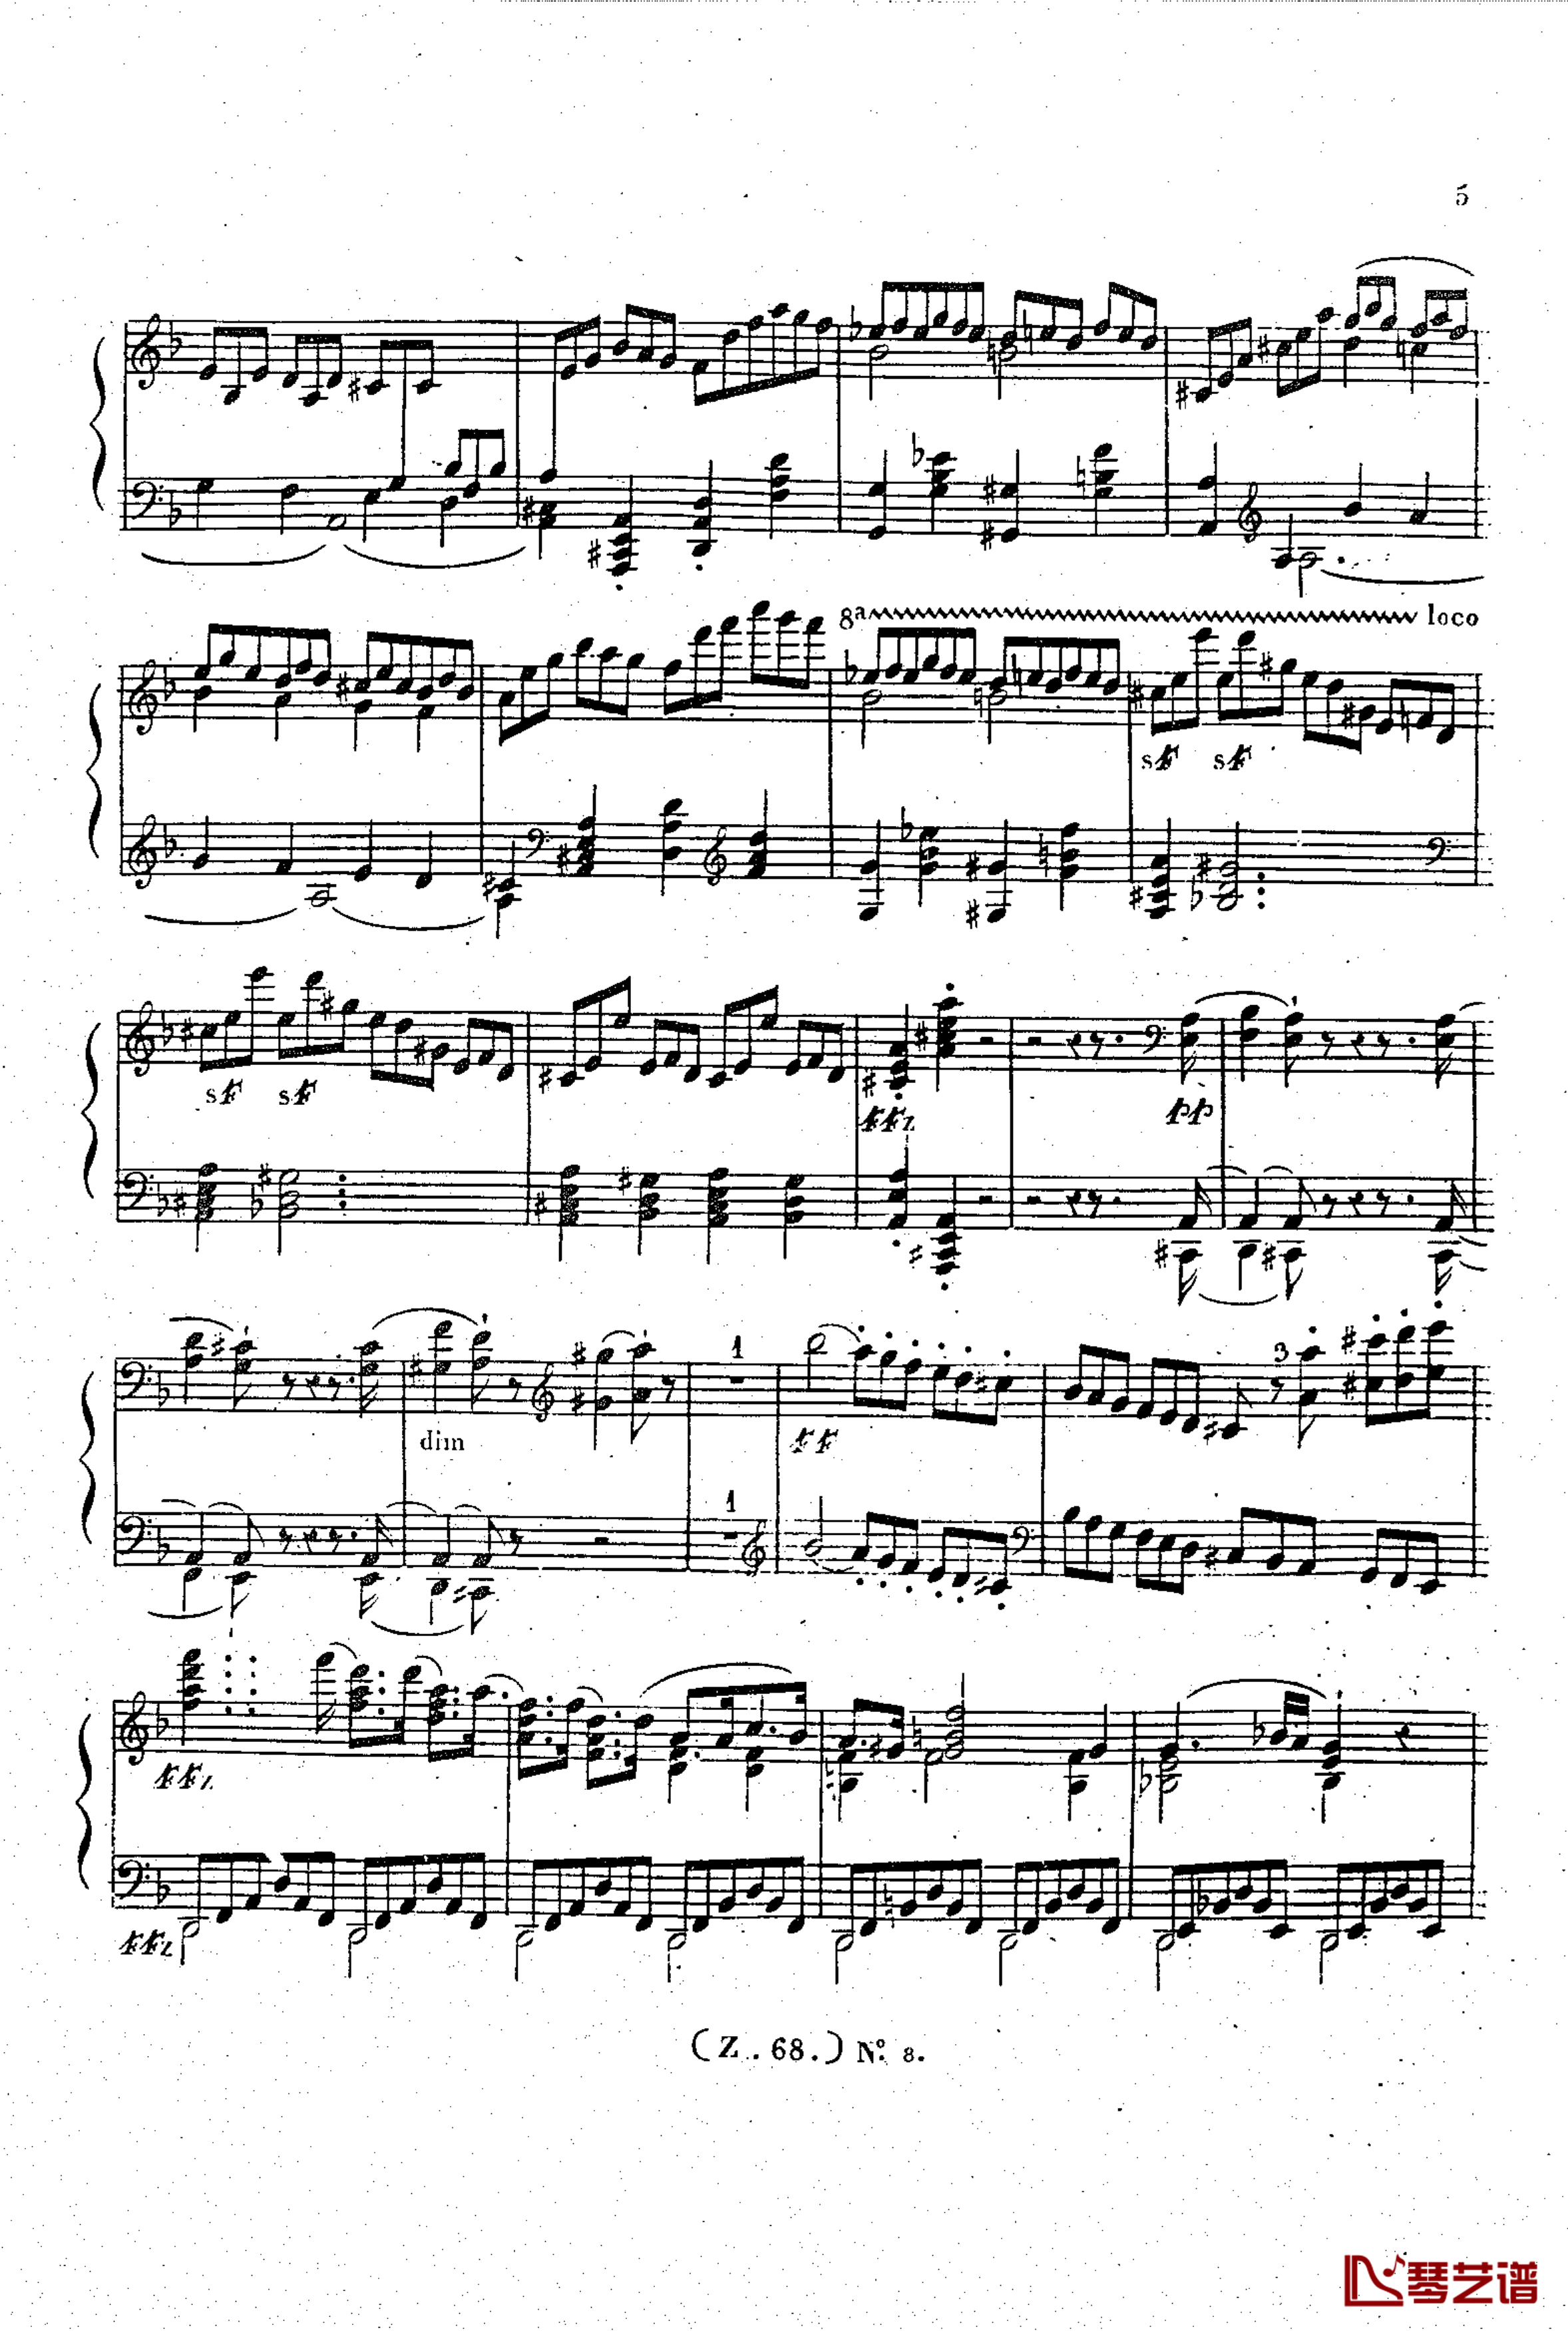  d小调第六钢琴奏鸣曲 Op.124钢琴谱-车尔尼-Czerny6